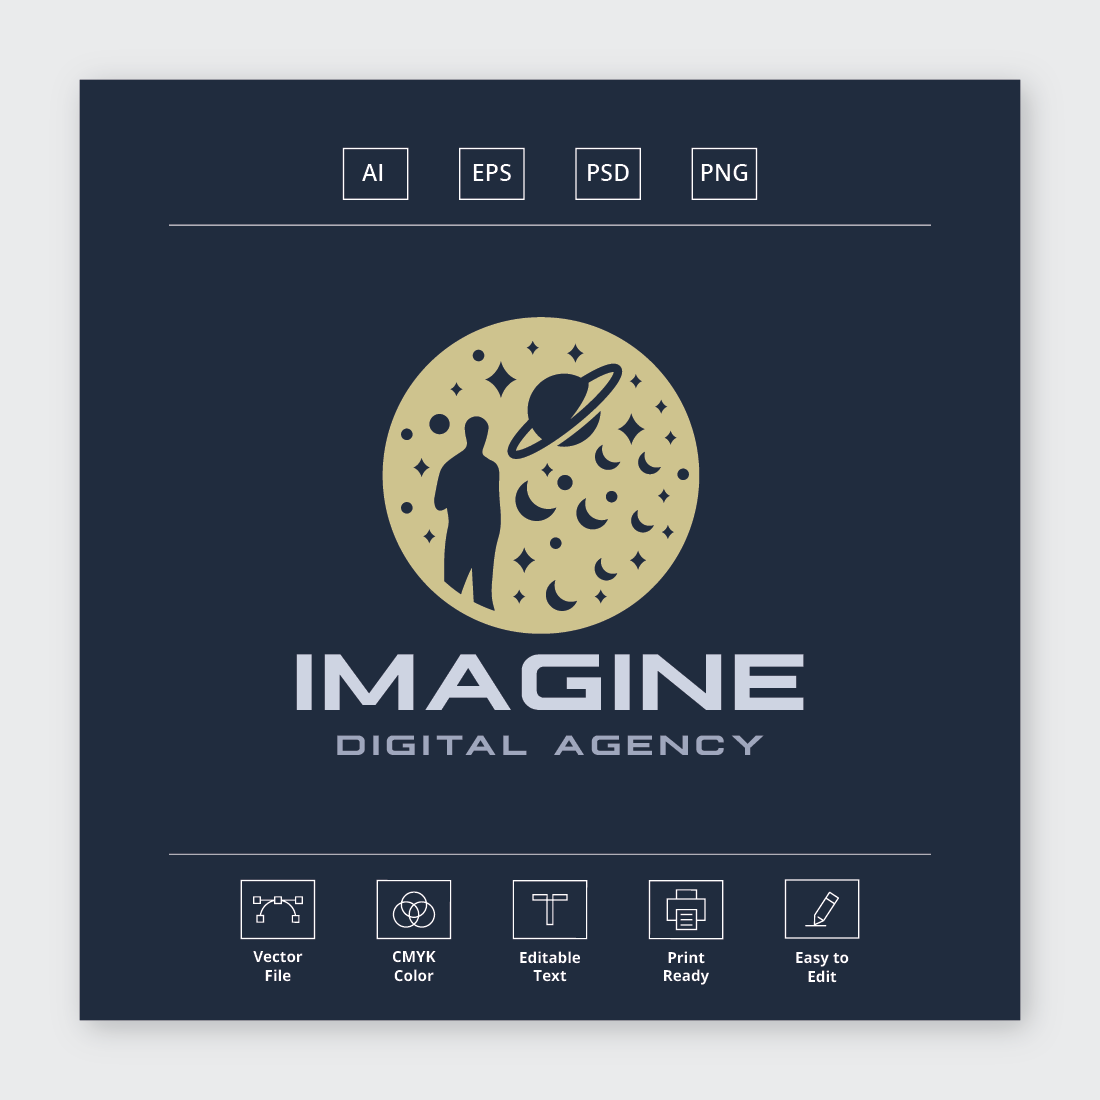 Imagine Digital Agency Logo preview image.